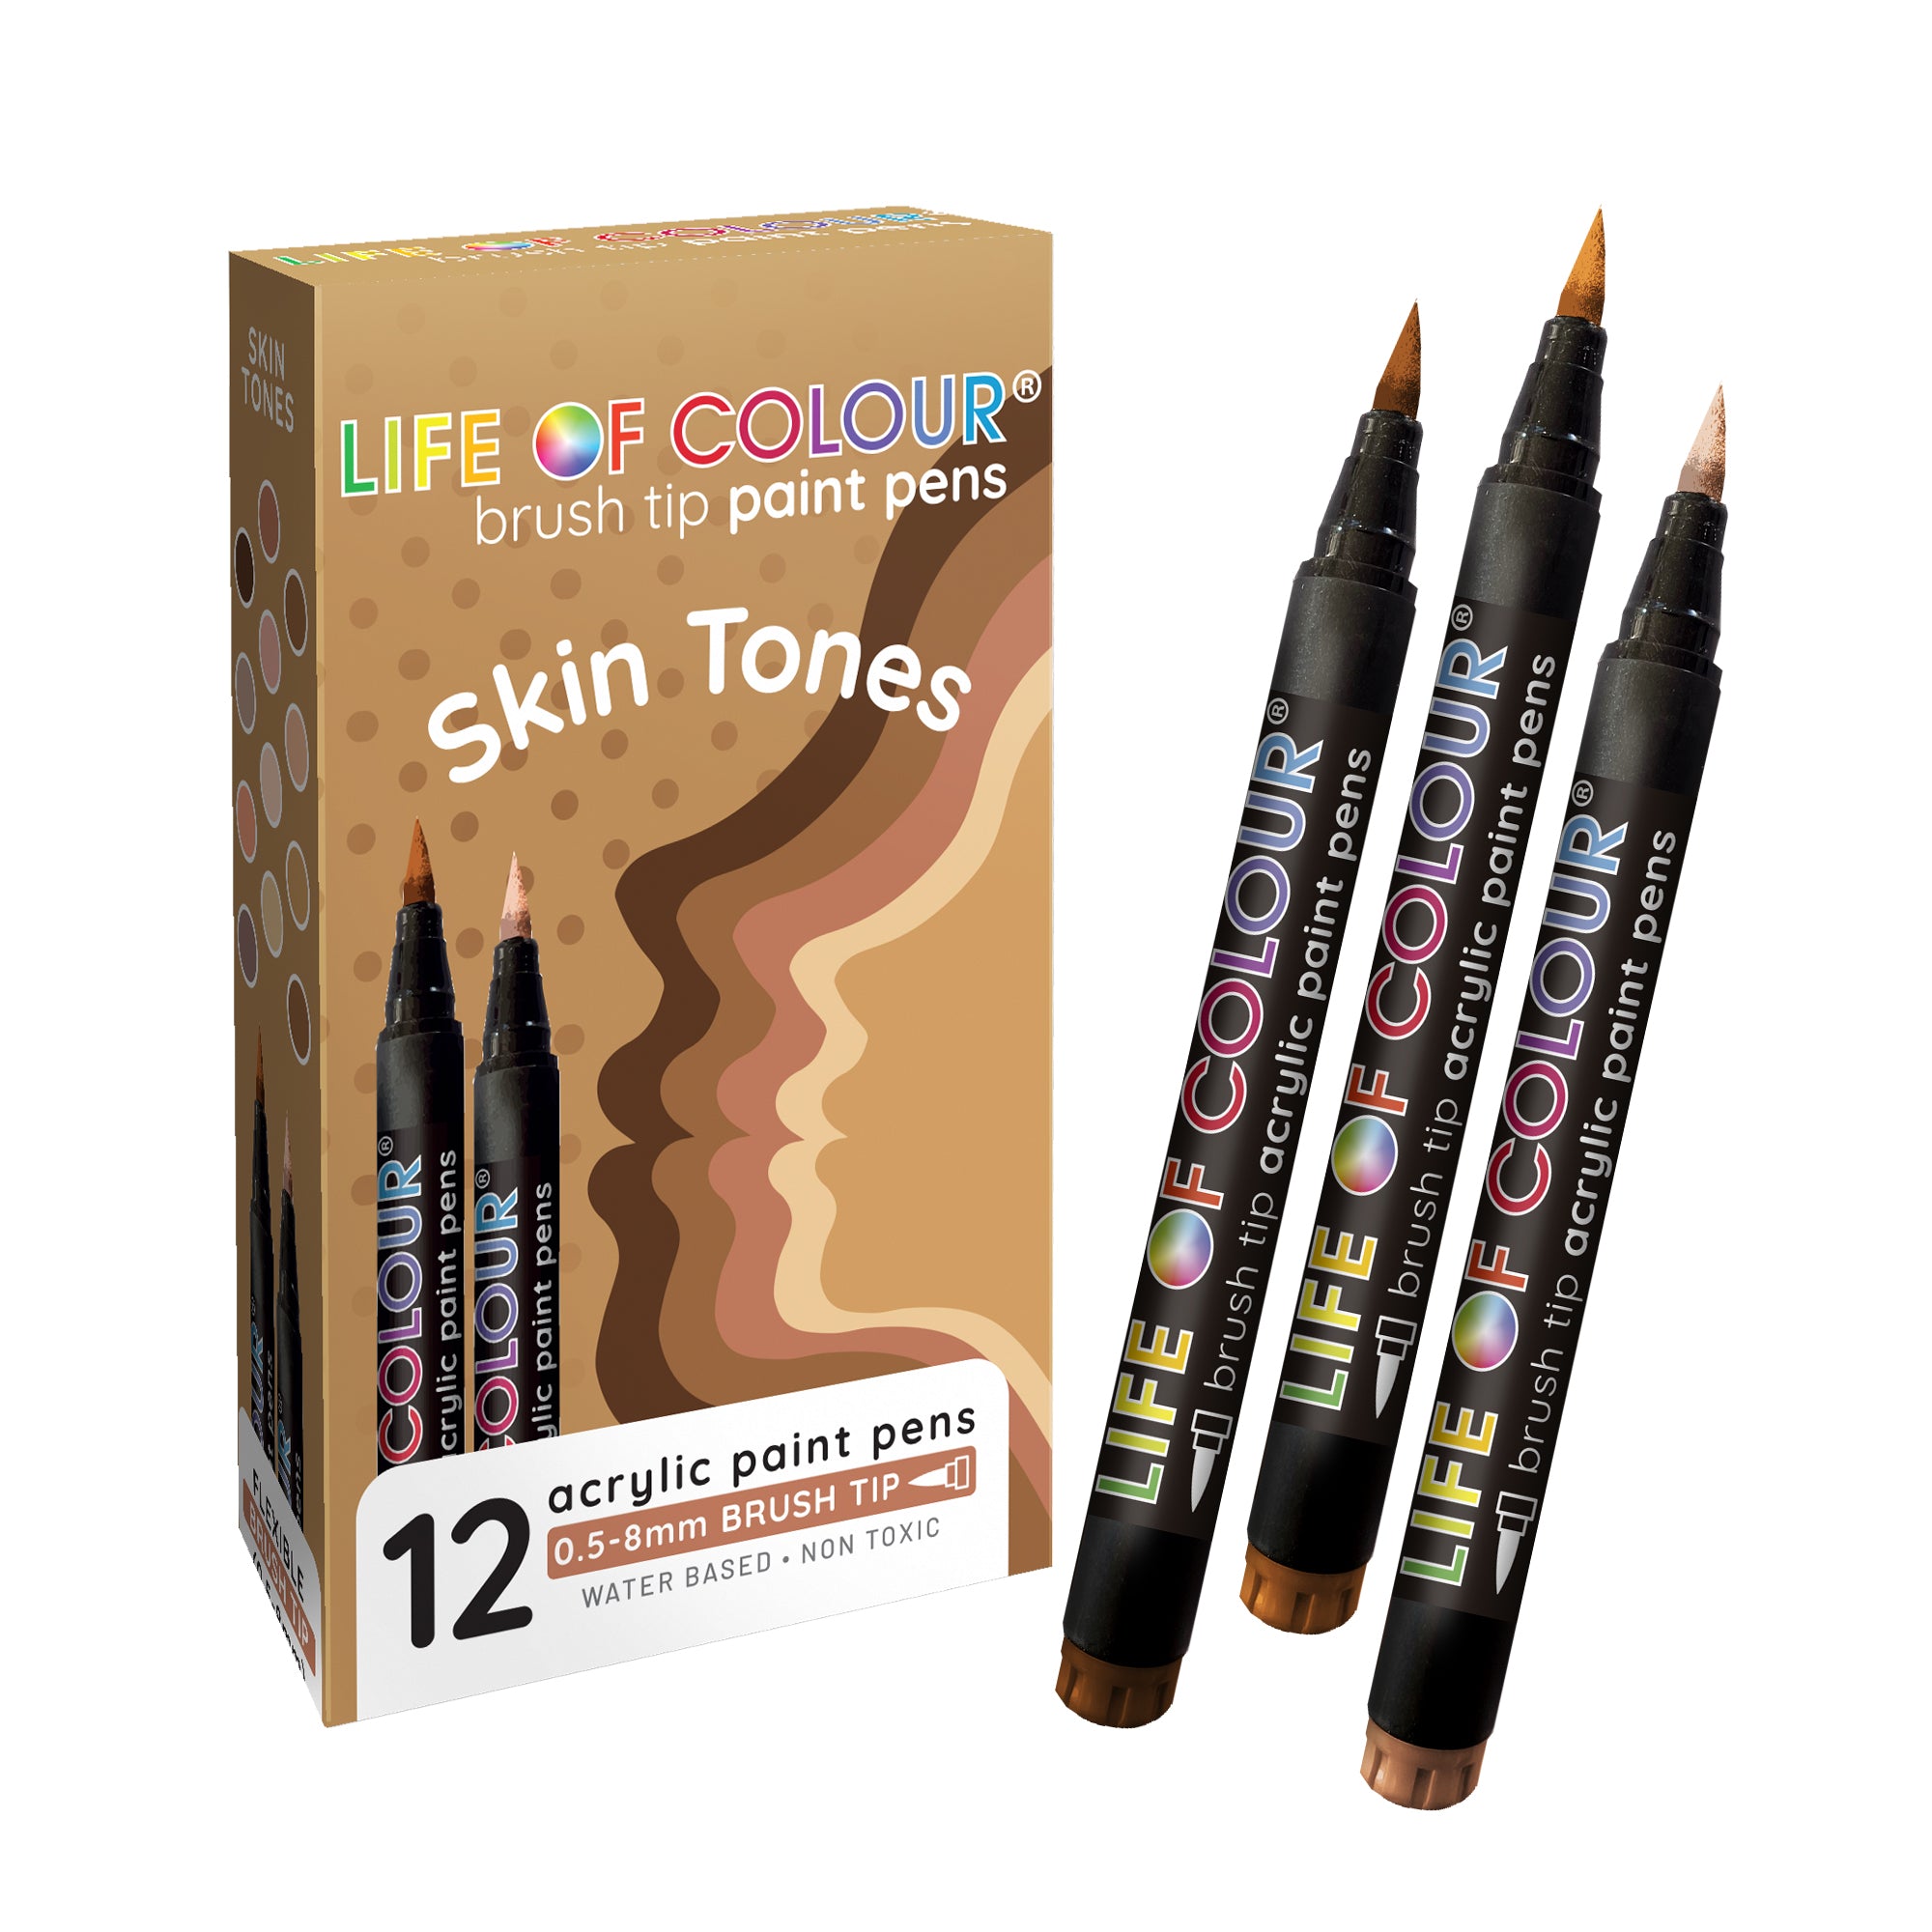 https://cdn.shopify.com/s/files/1/2374/1375/products/lifeofcolour_brush-tip-acrylic-paint-pens_skin-tones_2000x.jpg?v=1643925356